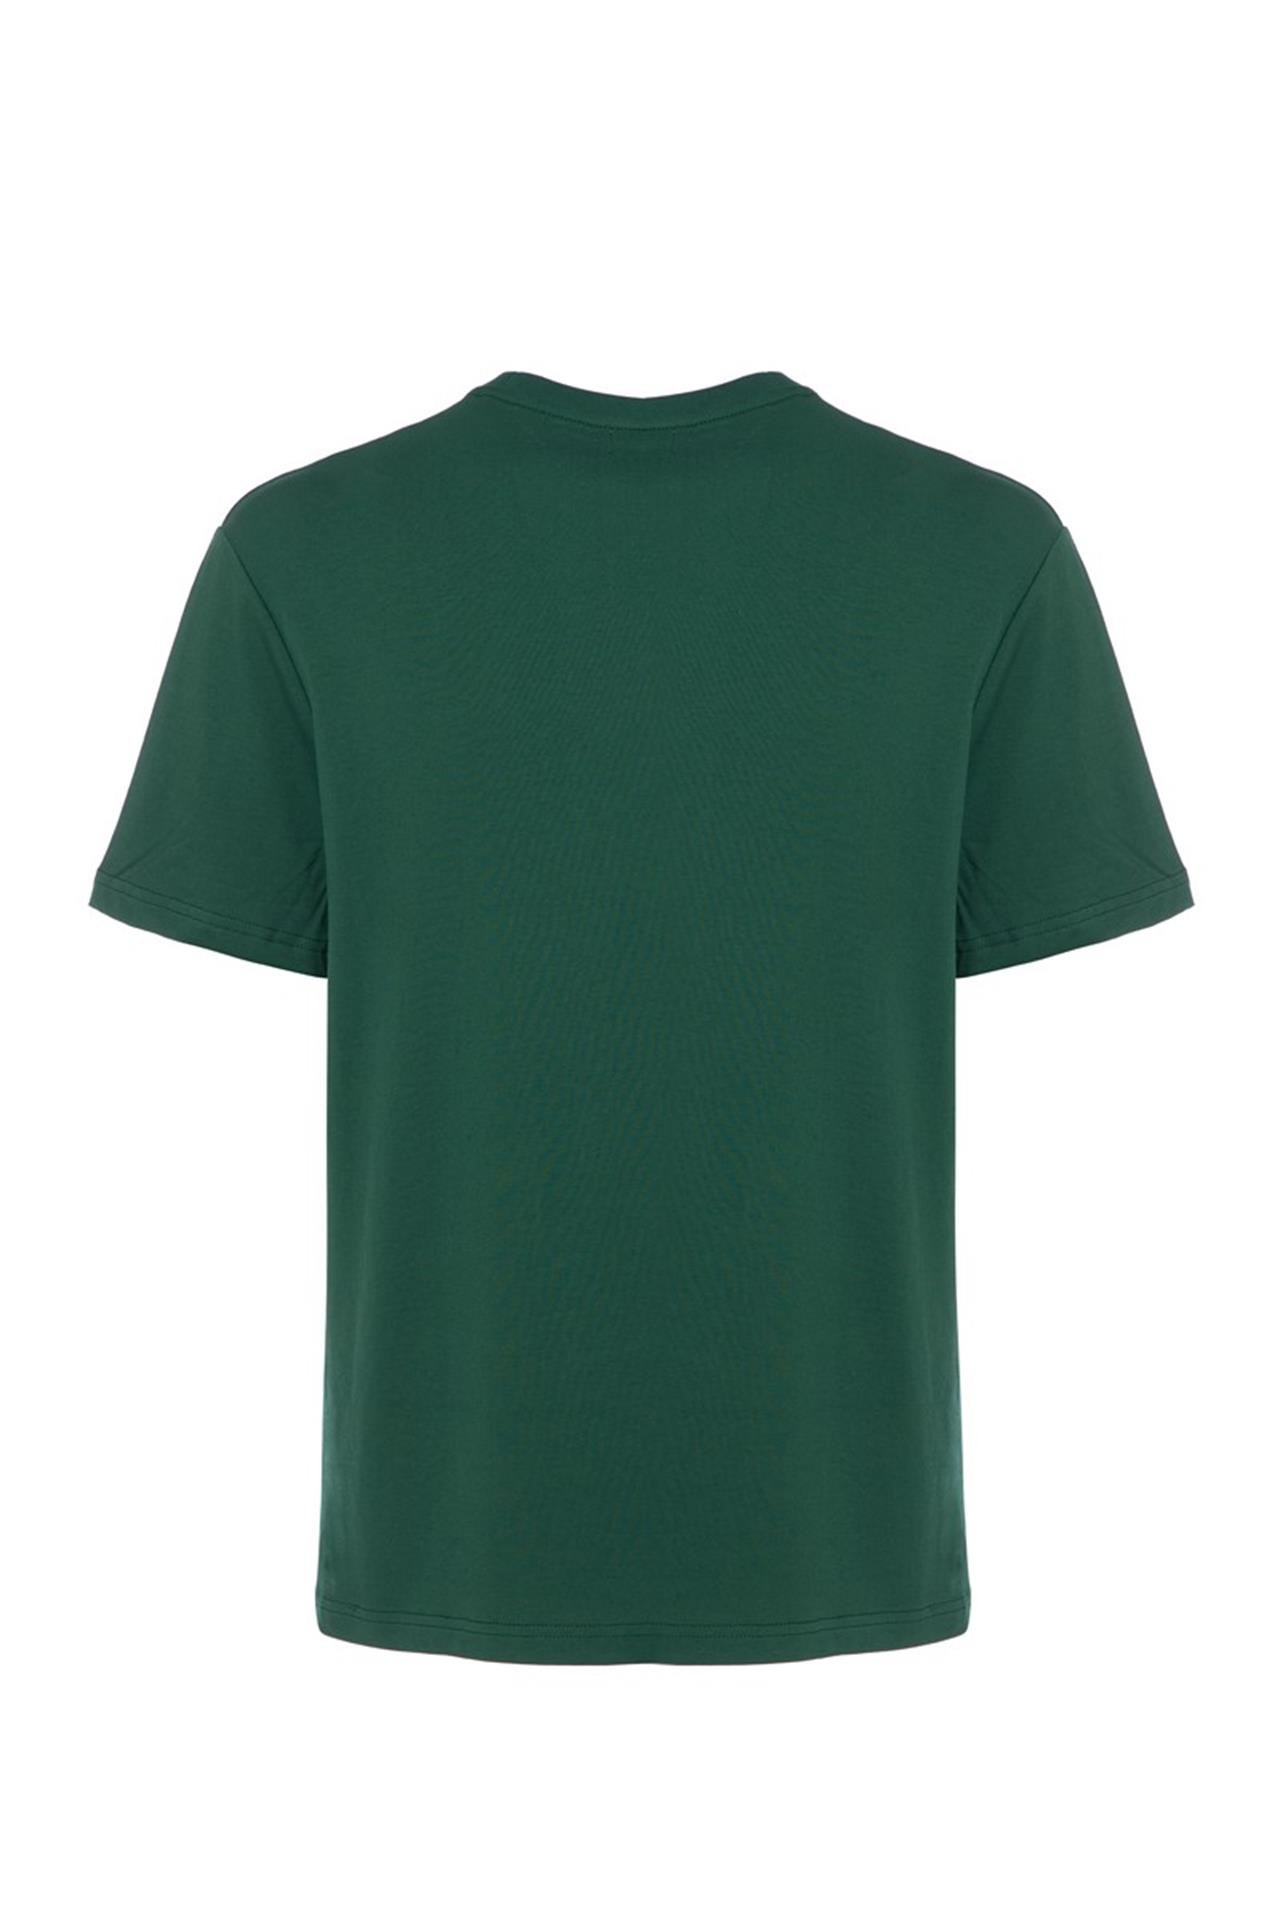 Rahat/Relaxed Fit Koyu Yeşil Erkek T-Shirt